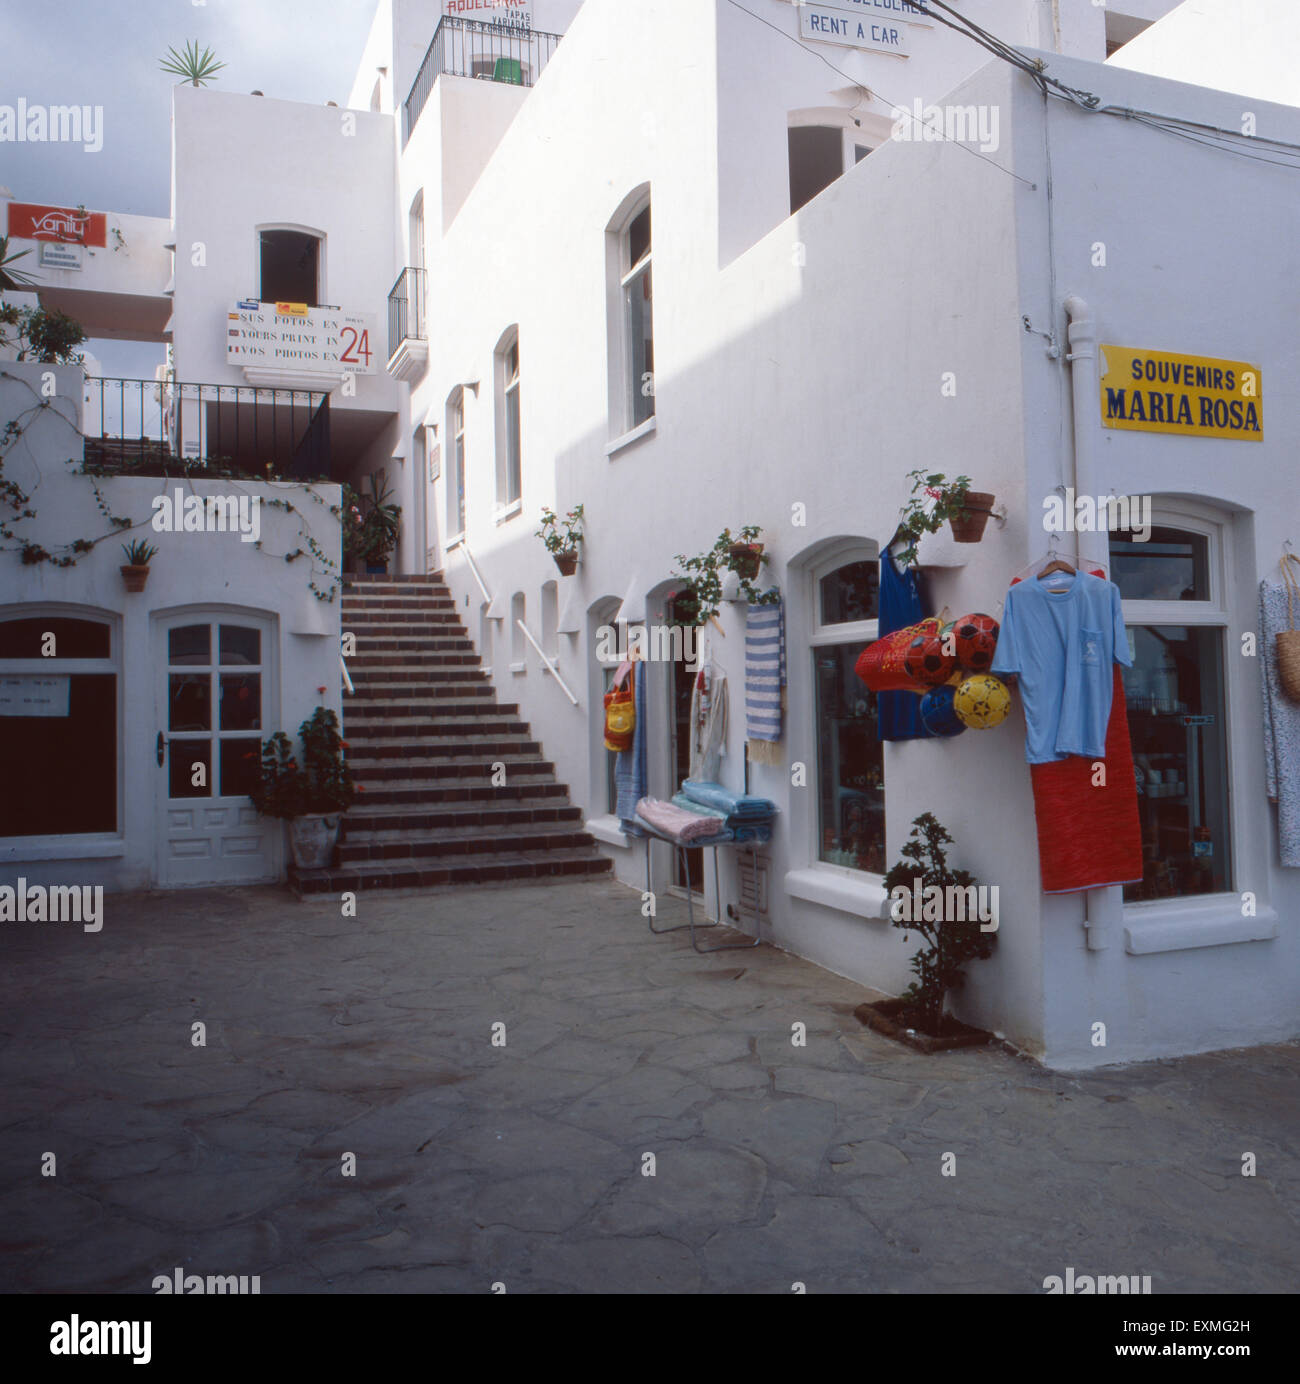 Unterwegs in den Straßen von Mojácar an der Costa de Almería,  Fuerteventura, Espagne années 80 er Jahre. Sur le chemin dans les rues de  Funchal sur la Costa de Almería, Andalousie, Espagne